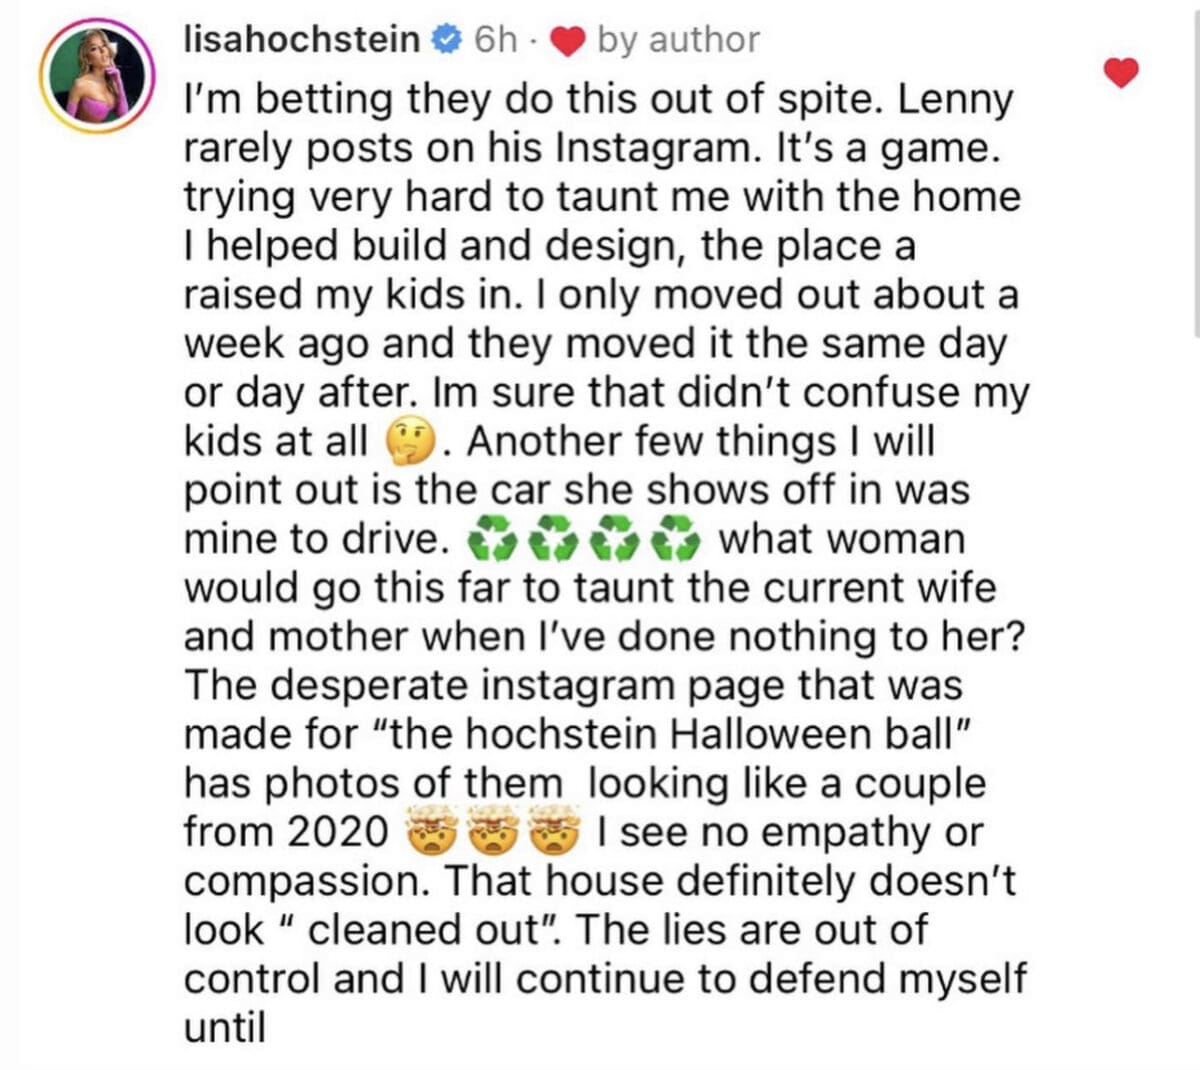 RHOM star Lisa Hochstein responds to Lenny taunting her on social media